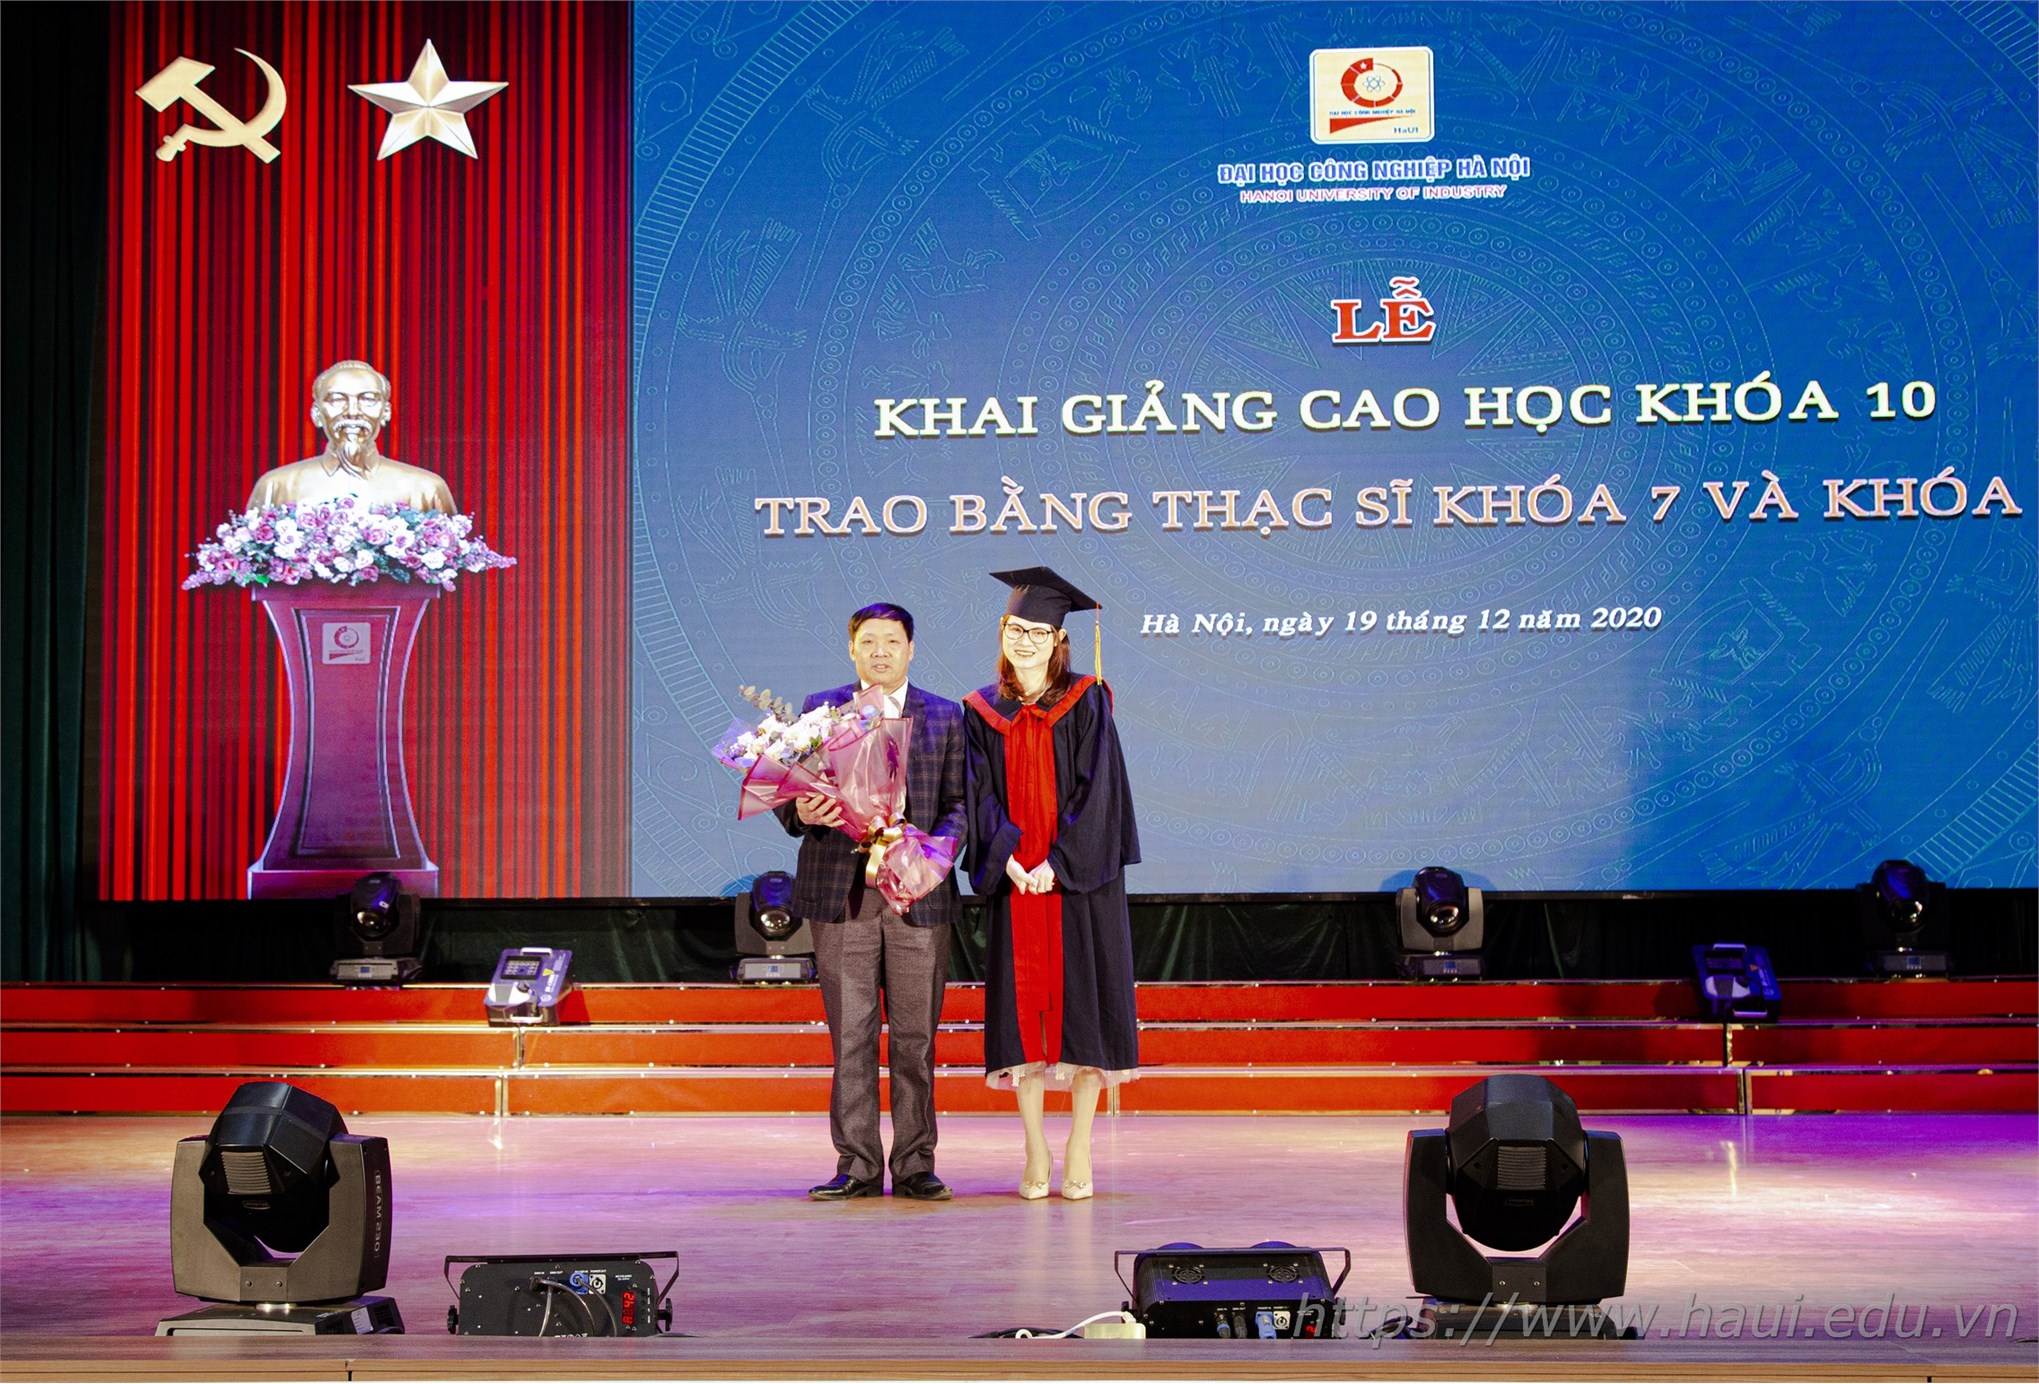 Opening Ceremony and Graduation & Master Degree Award Ceremony